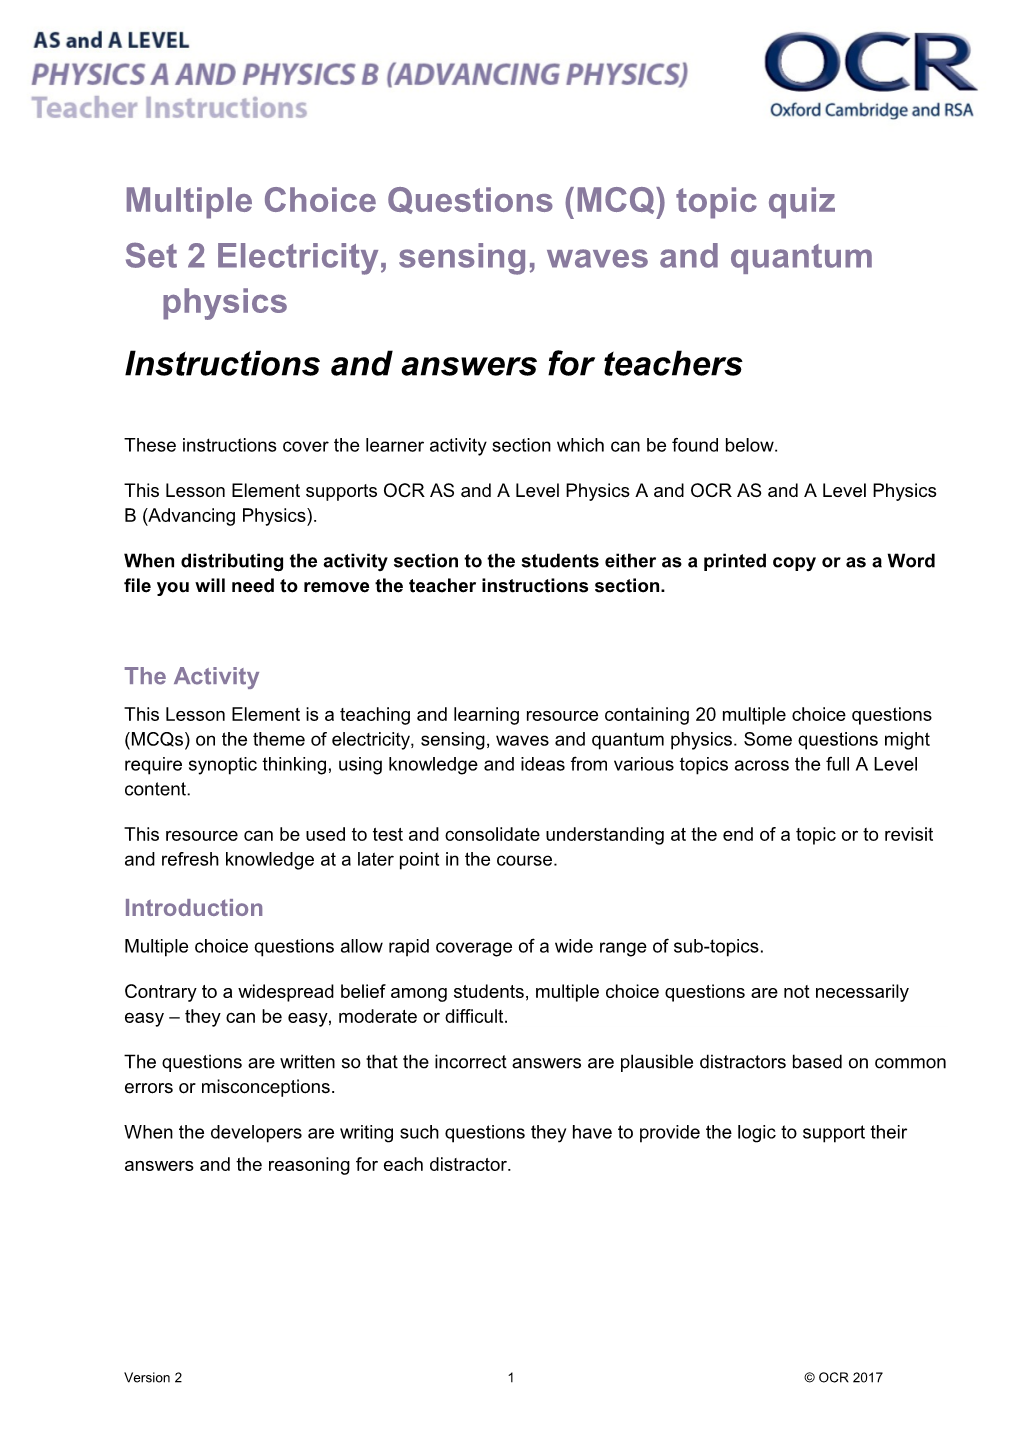 OCR a Level Physics a Lesson Element Set 2 Electricity, Sensing, Waves and Quantum Physics